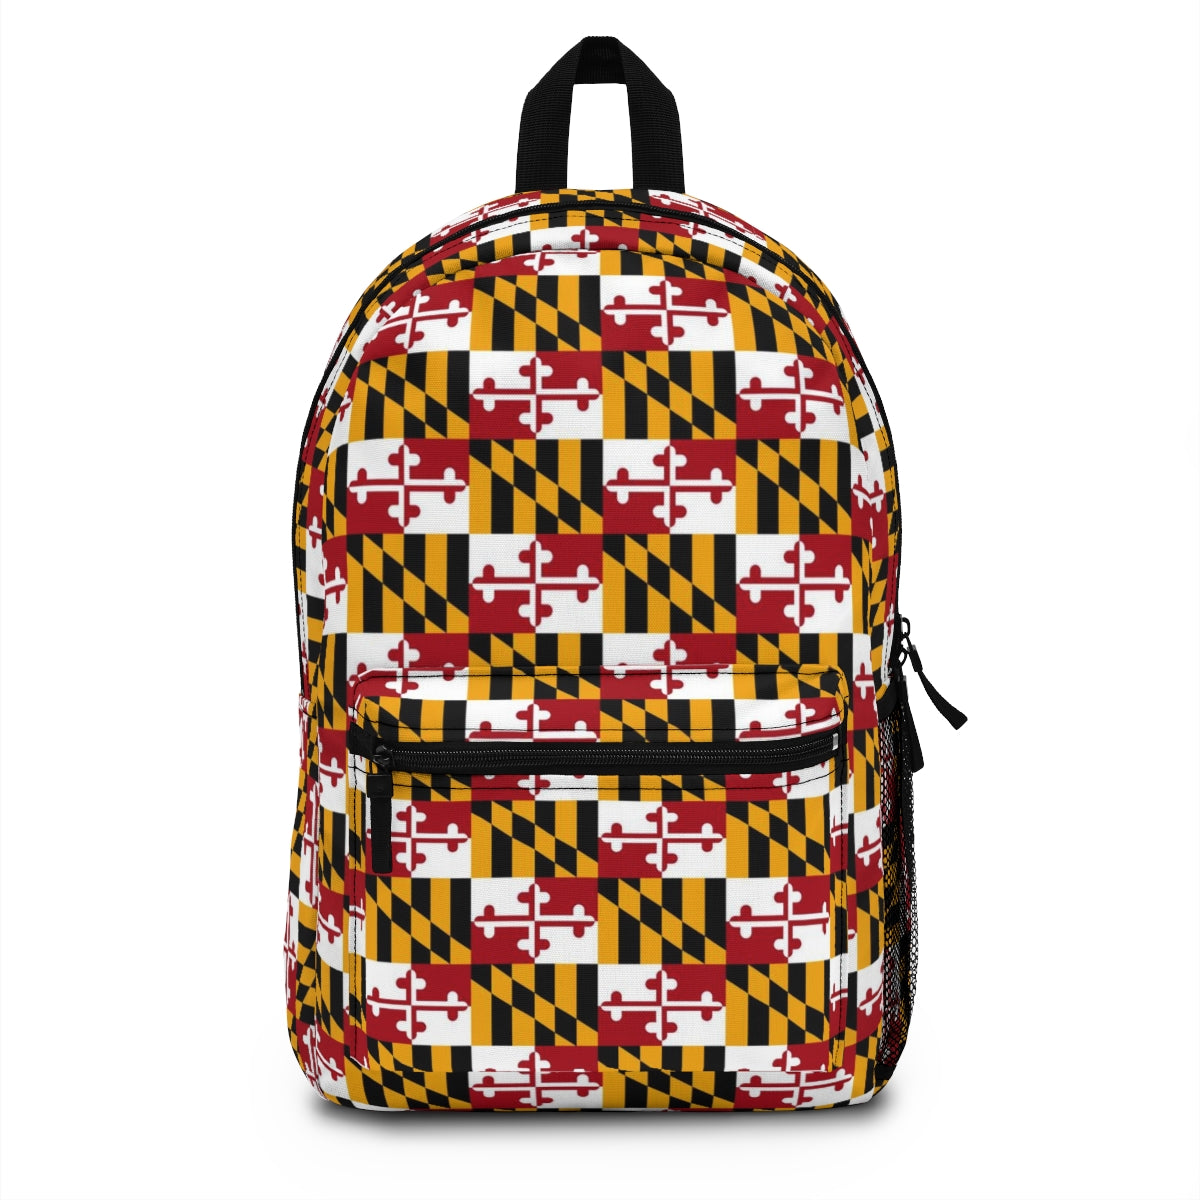 Celebrate Maryland! - Backpack